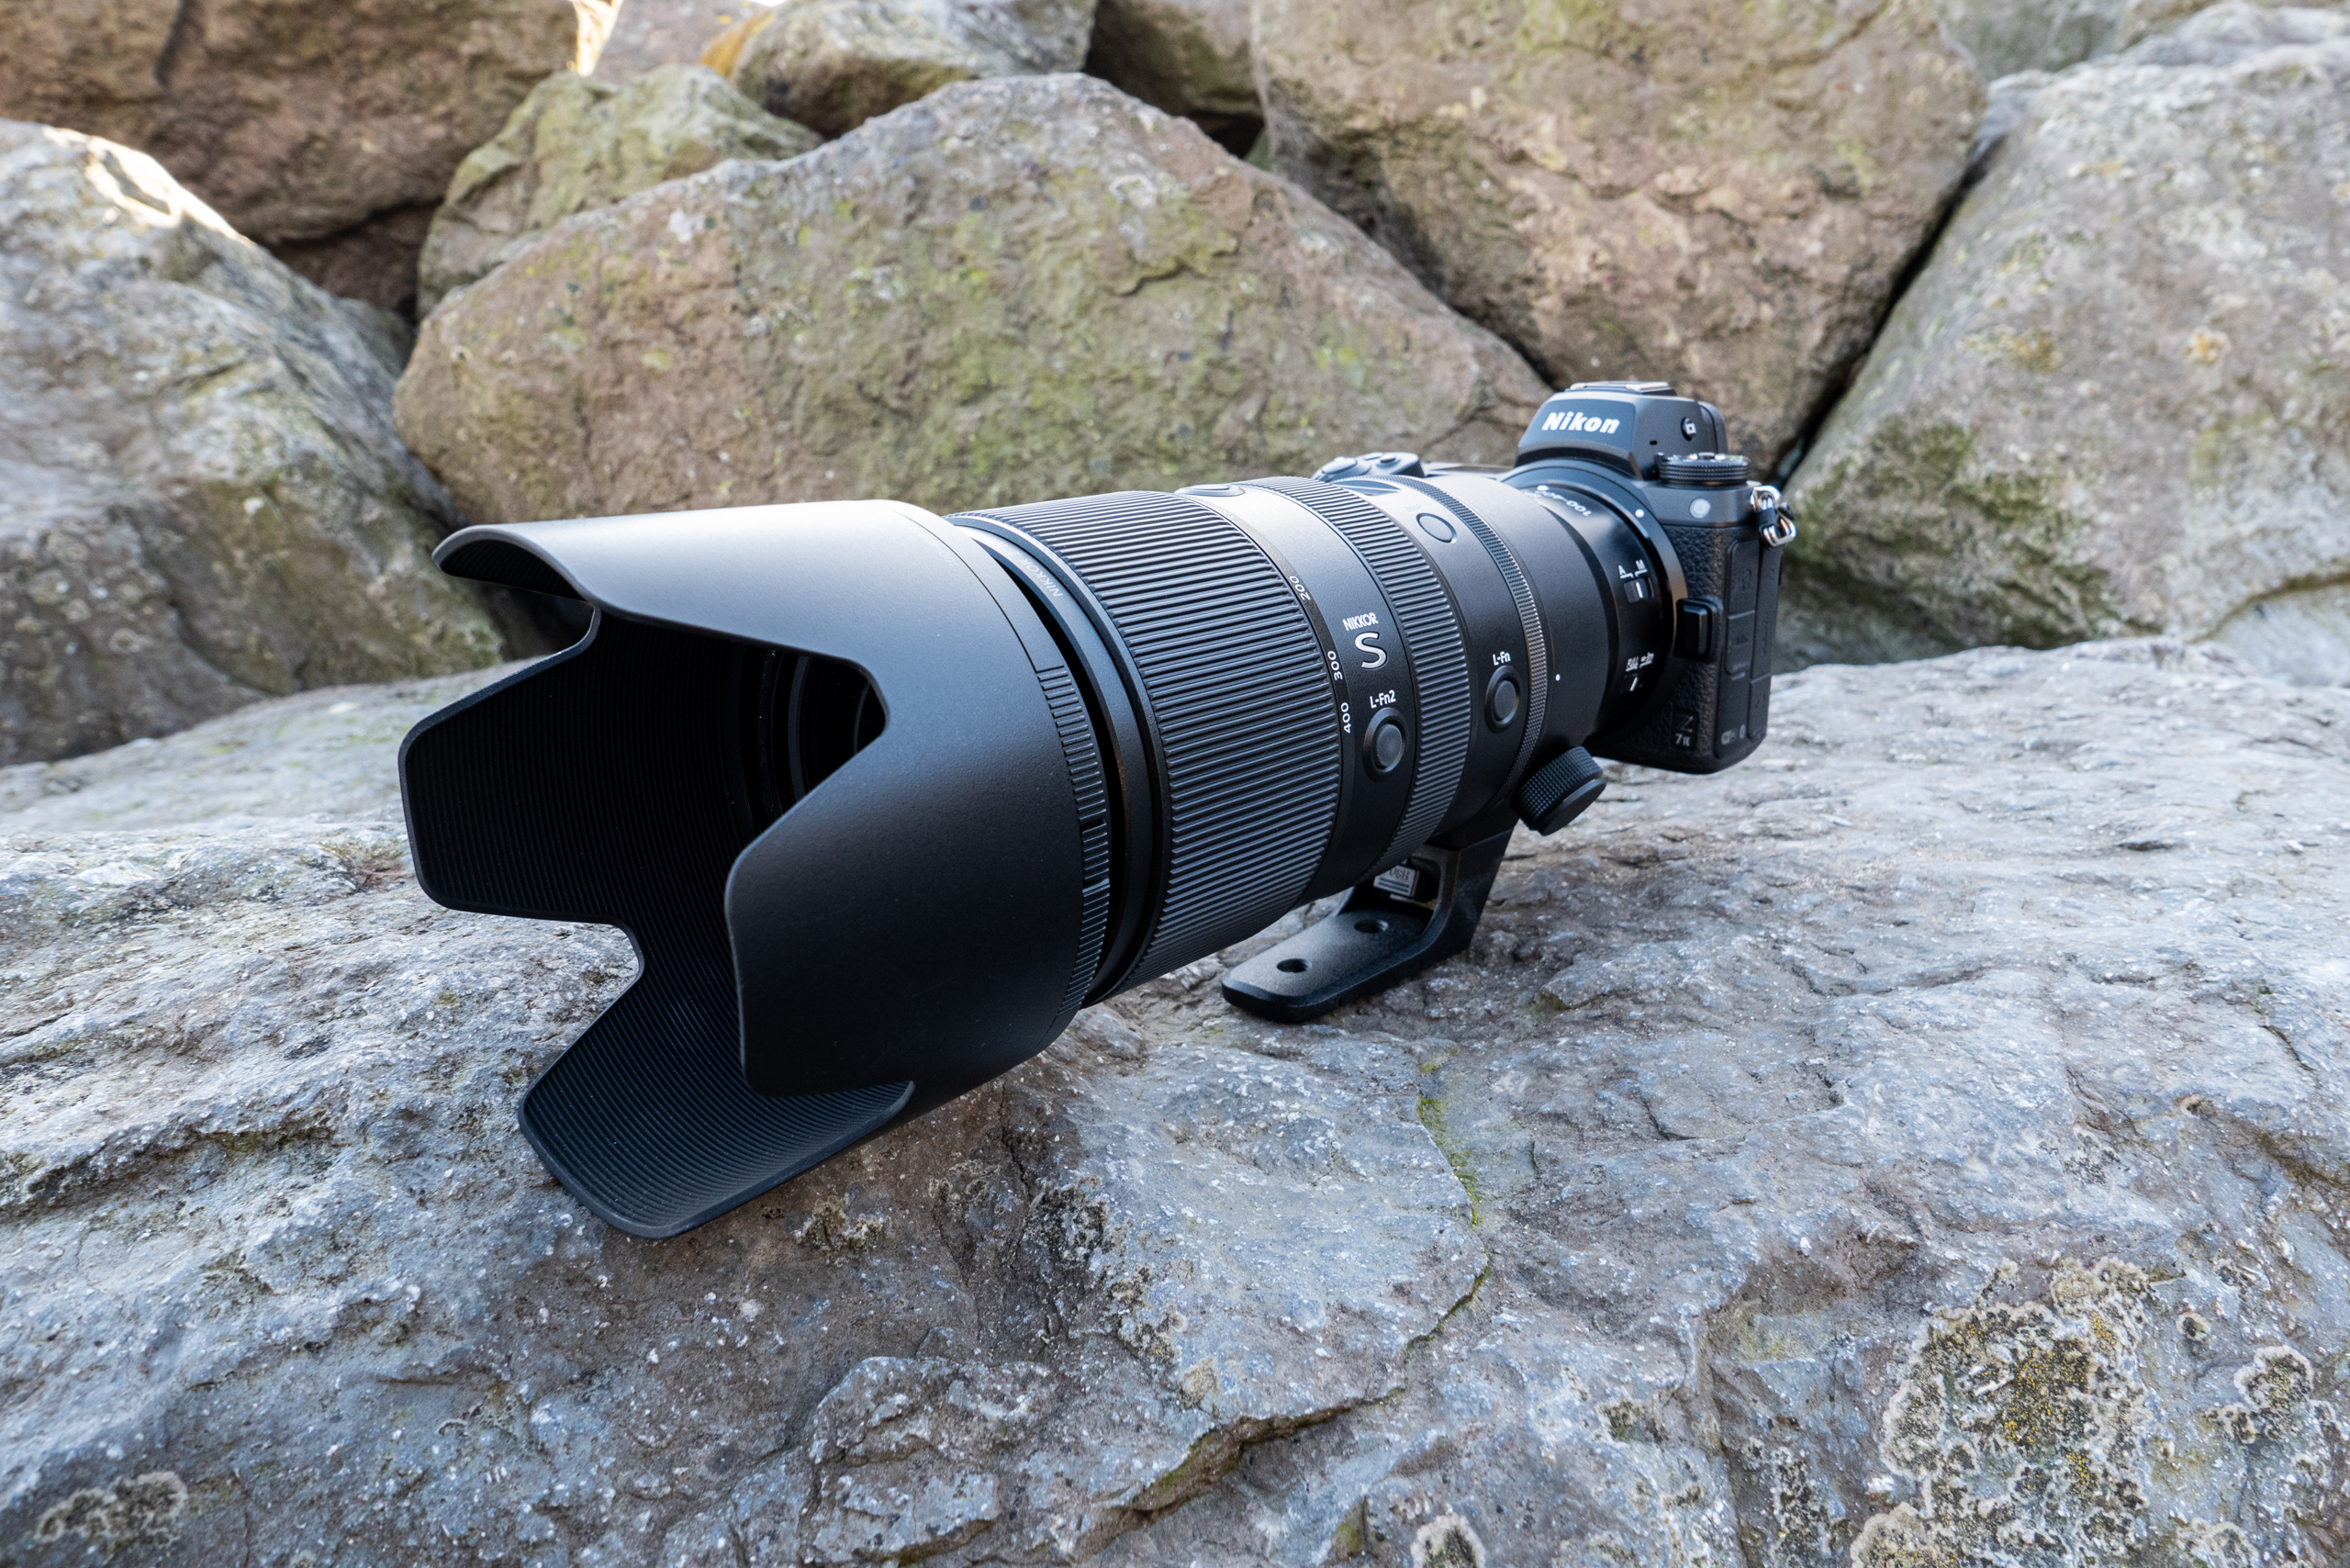 Nikkor 100-400mm with lens hood